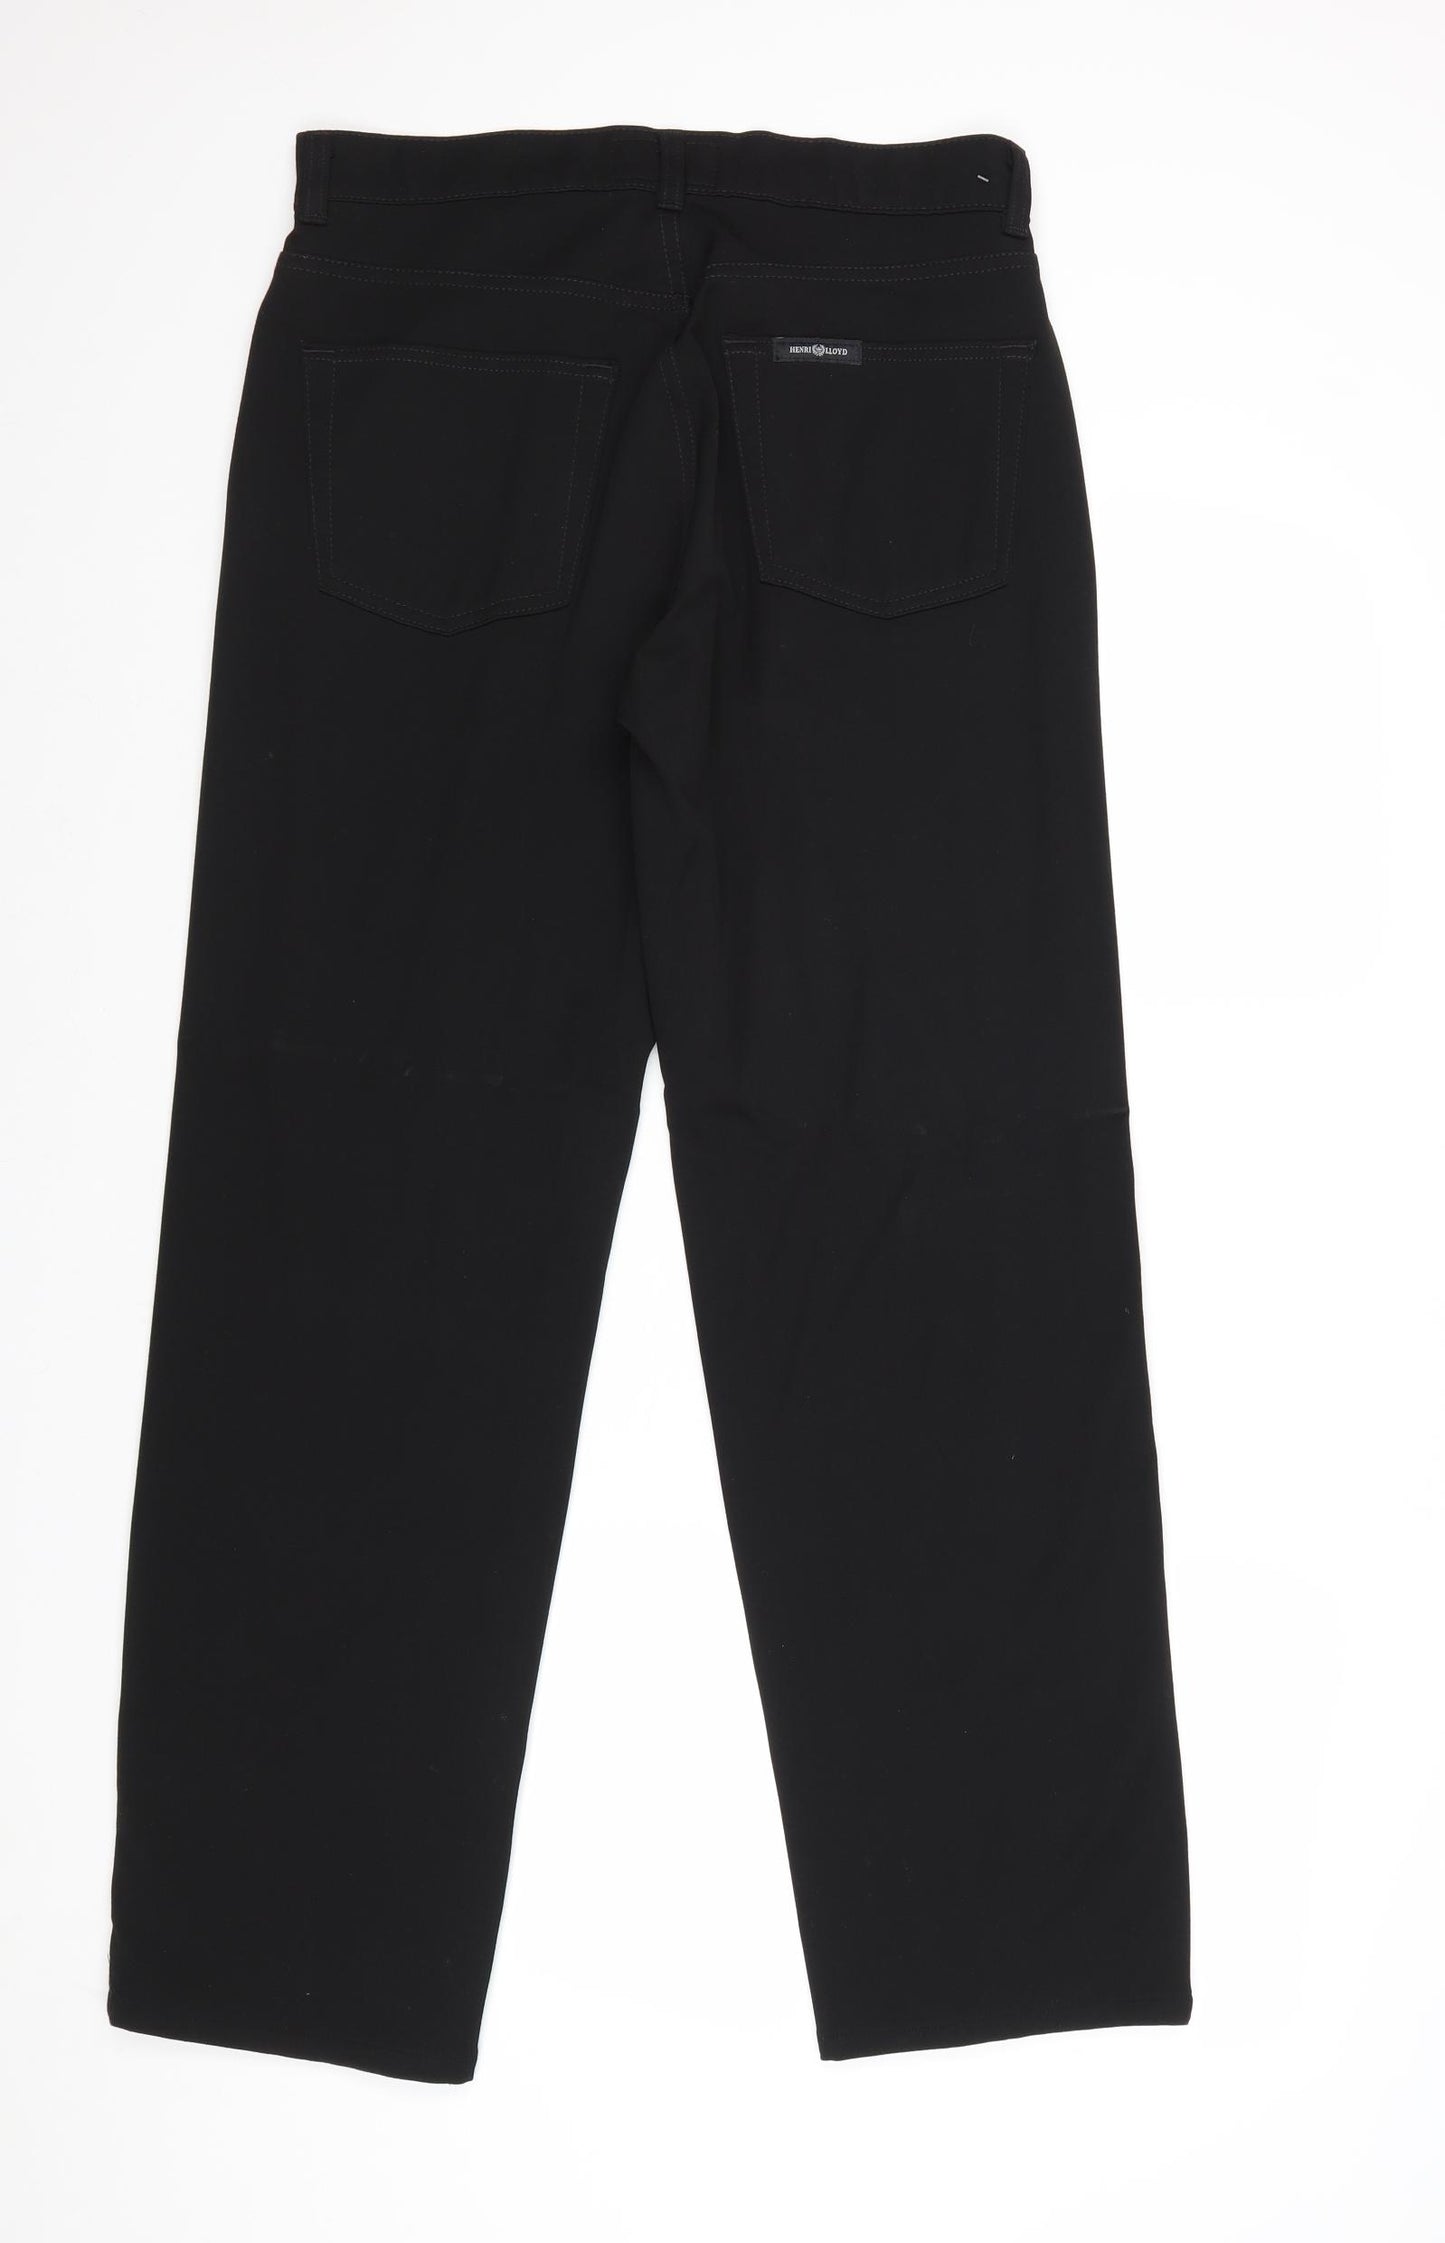 Henri Lloyd Mens Black Viscose Dress Pants Trousers Size 32 in Regular Zip